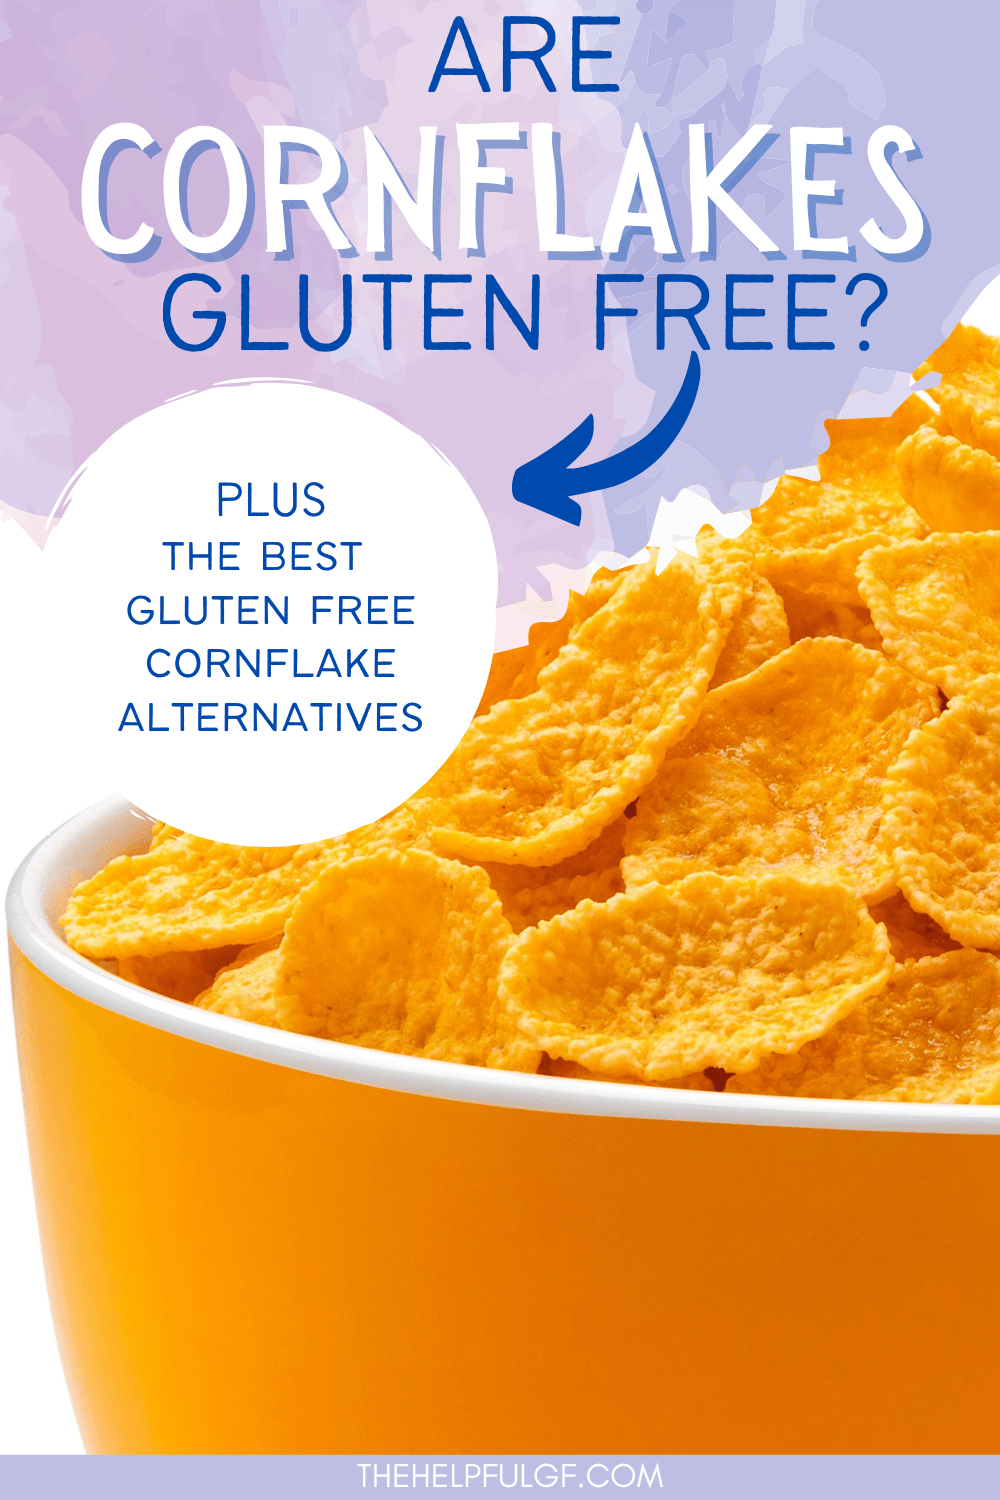 The Top 10 Gluten-Free Cereals